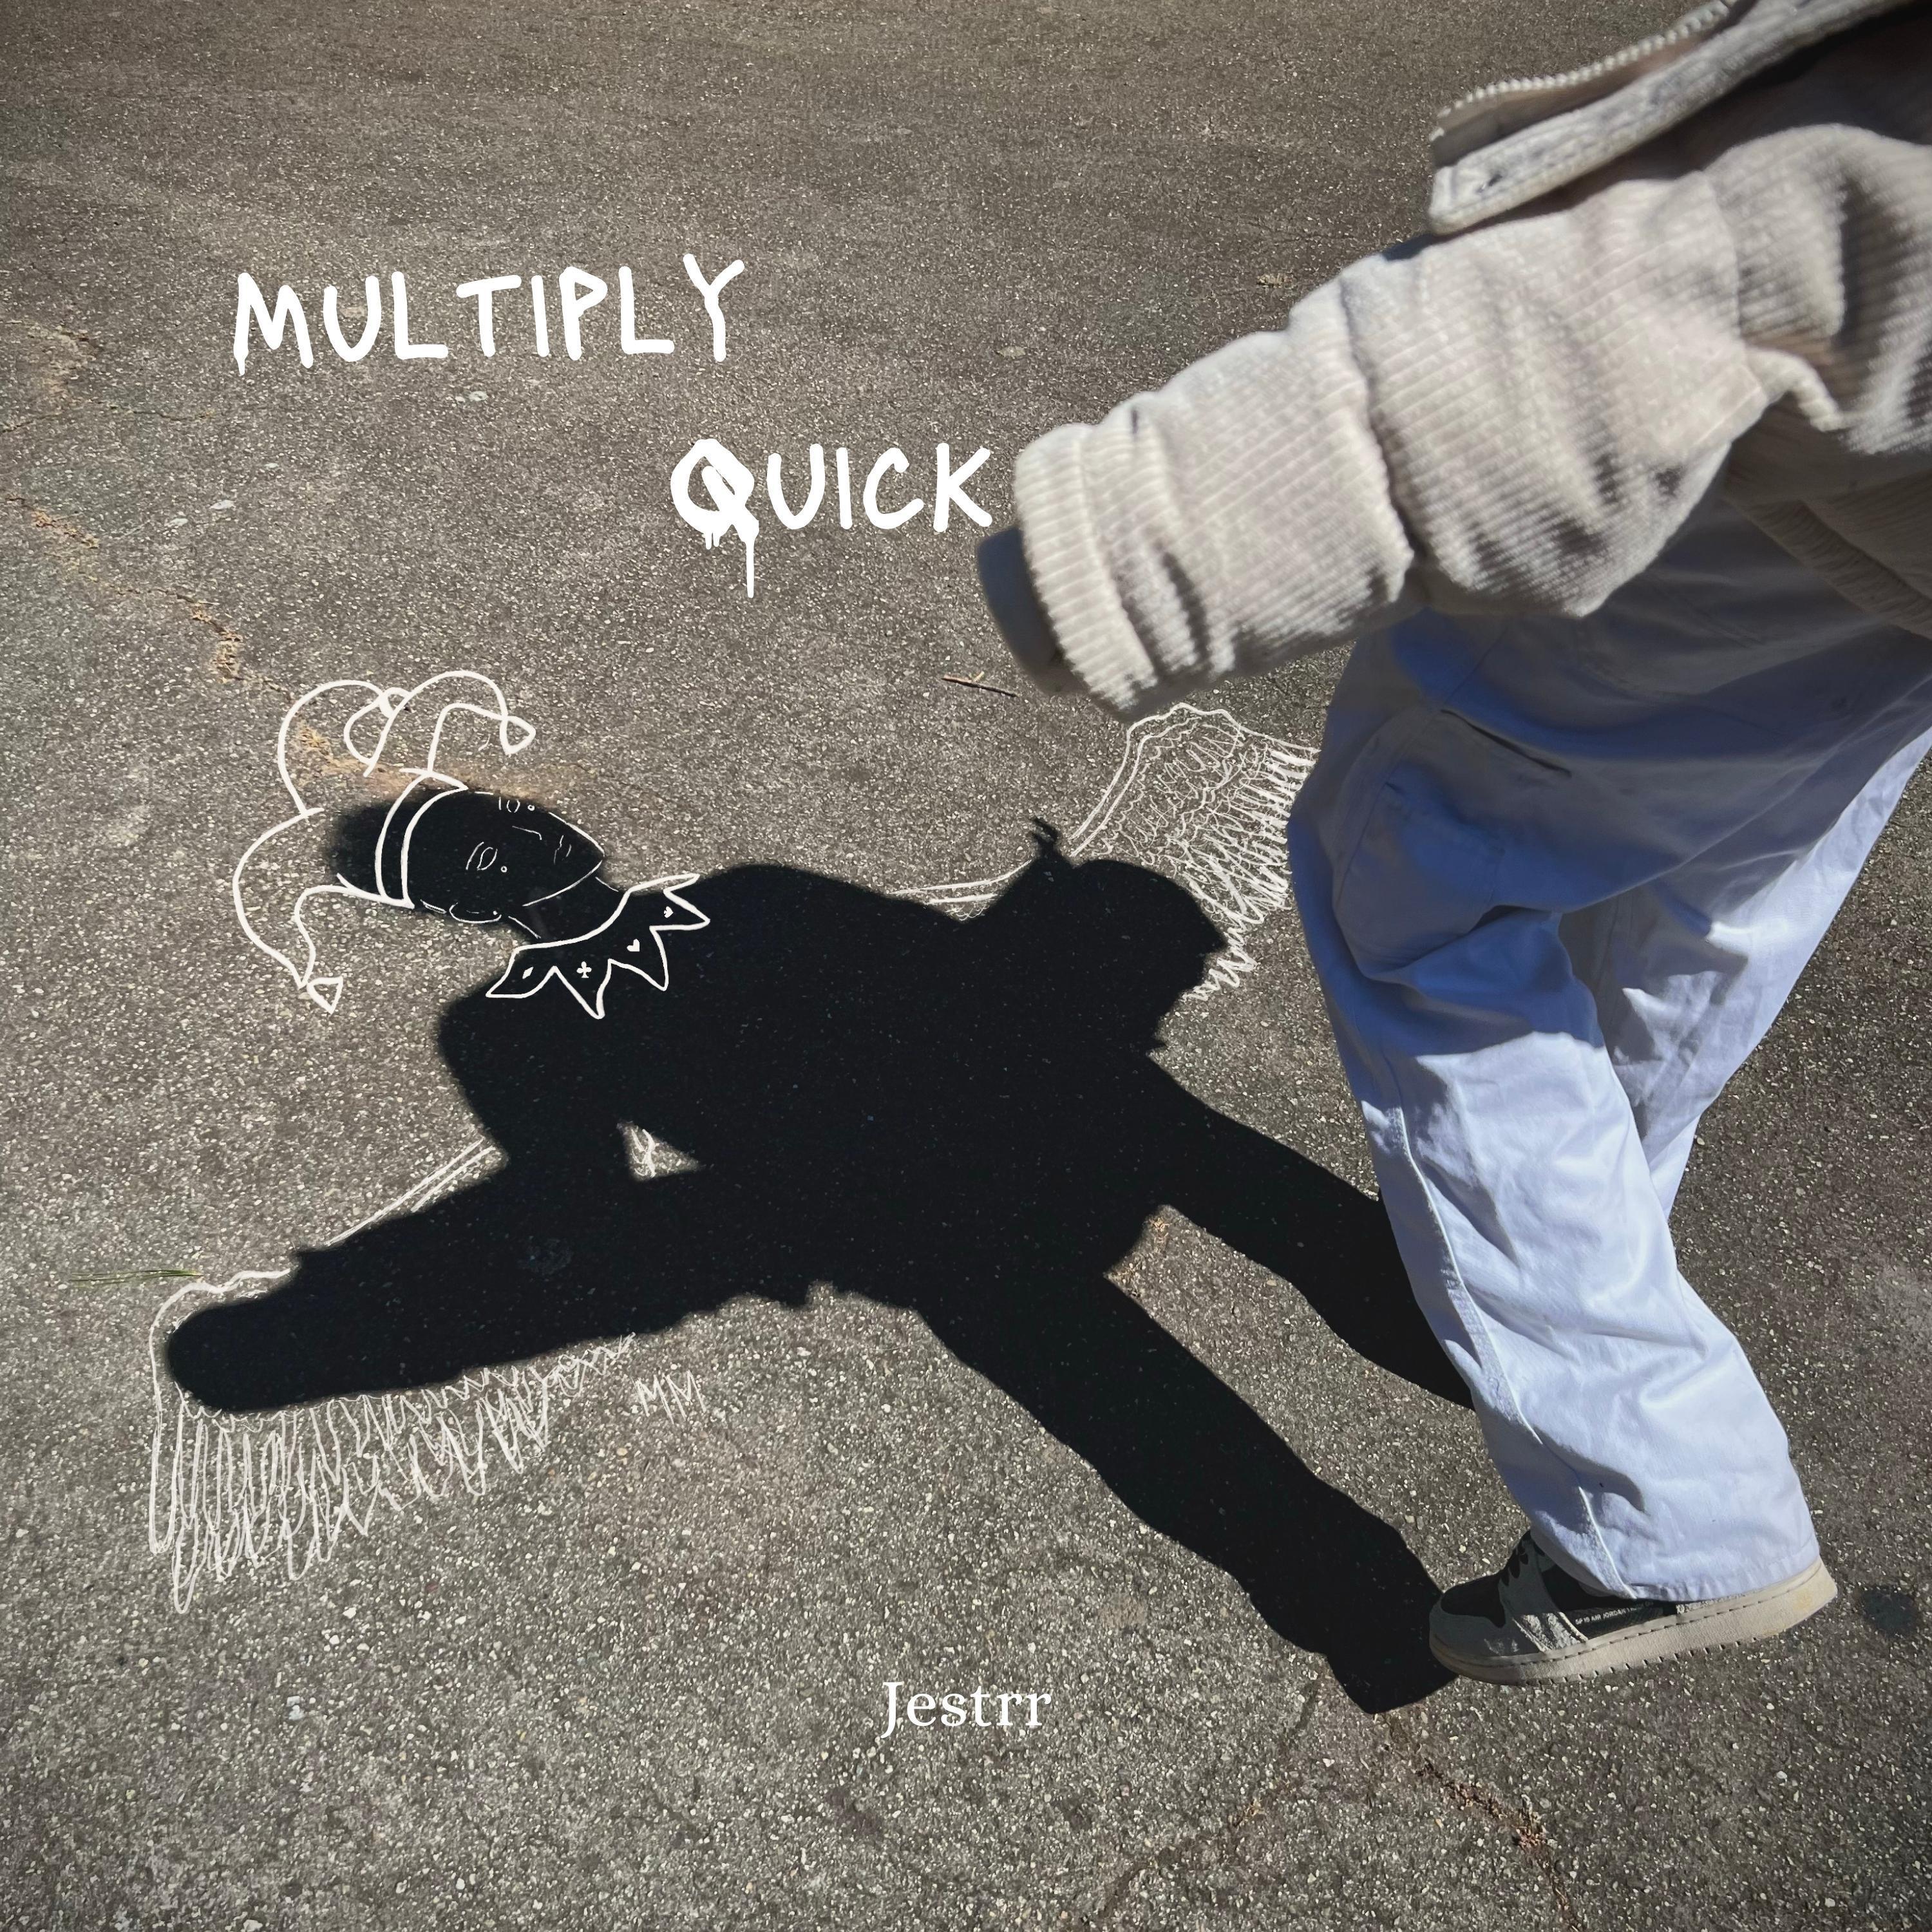 jestrr - Multiply Quick